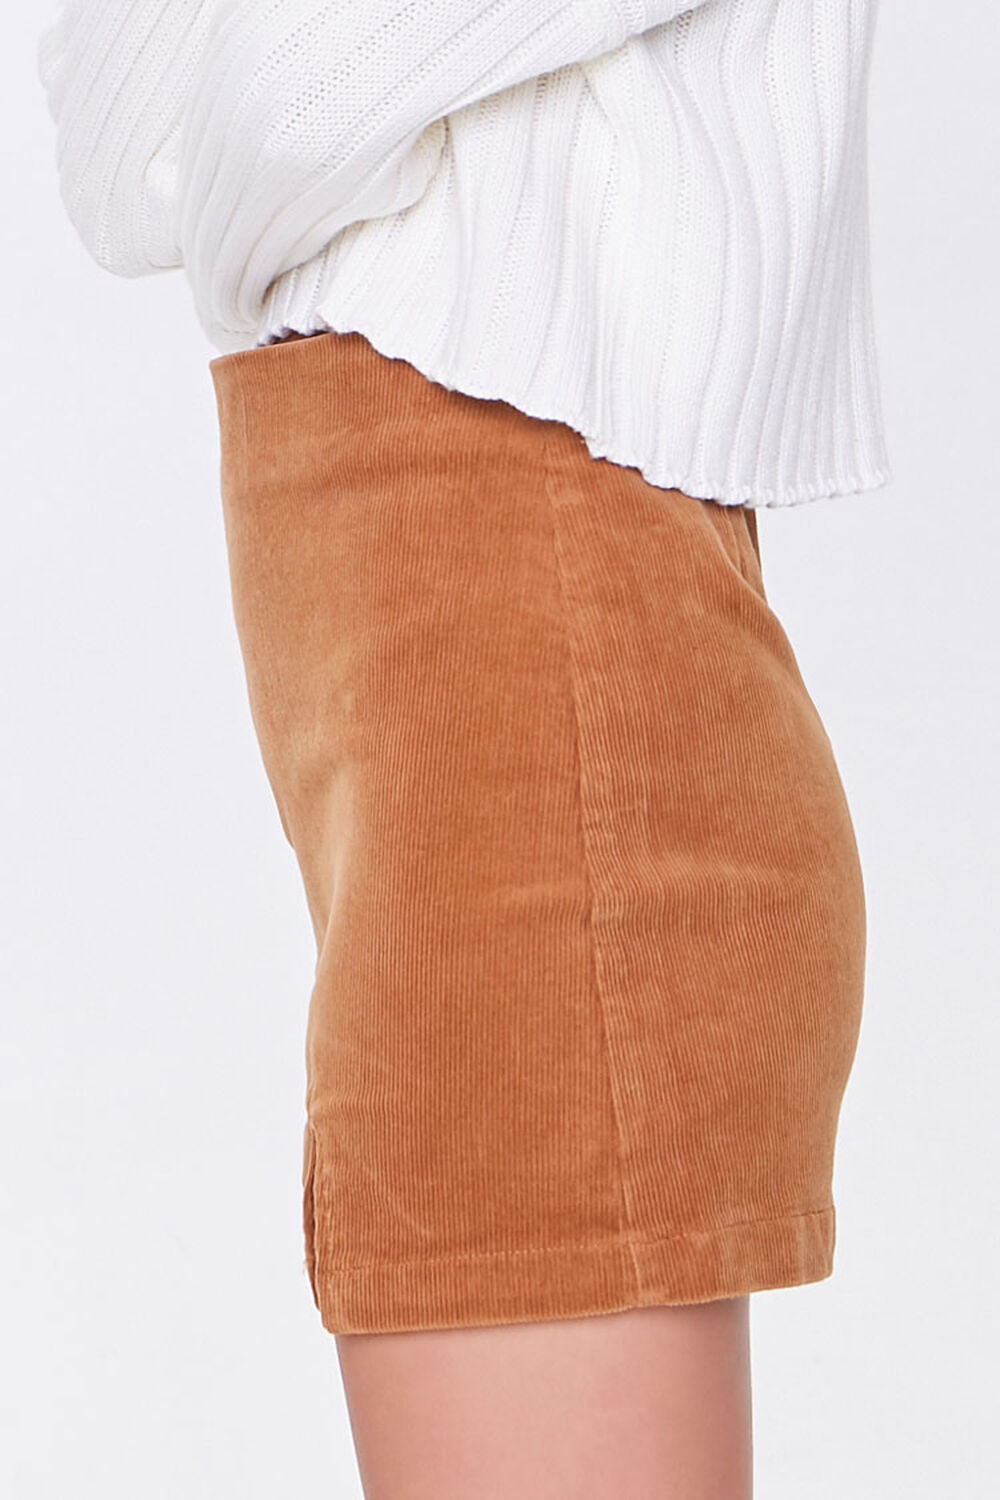 CAMEL Corduroy Mini Skirt, image 3